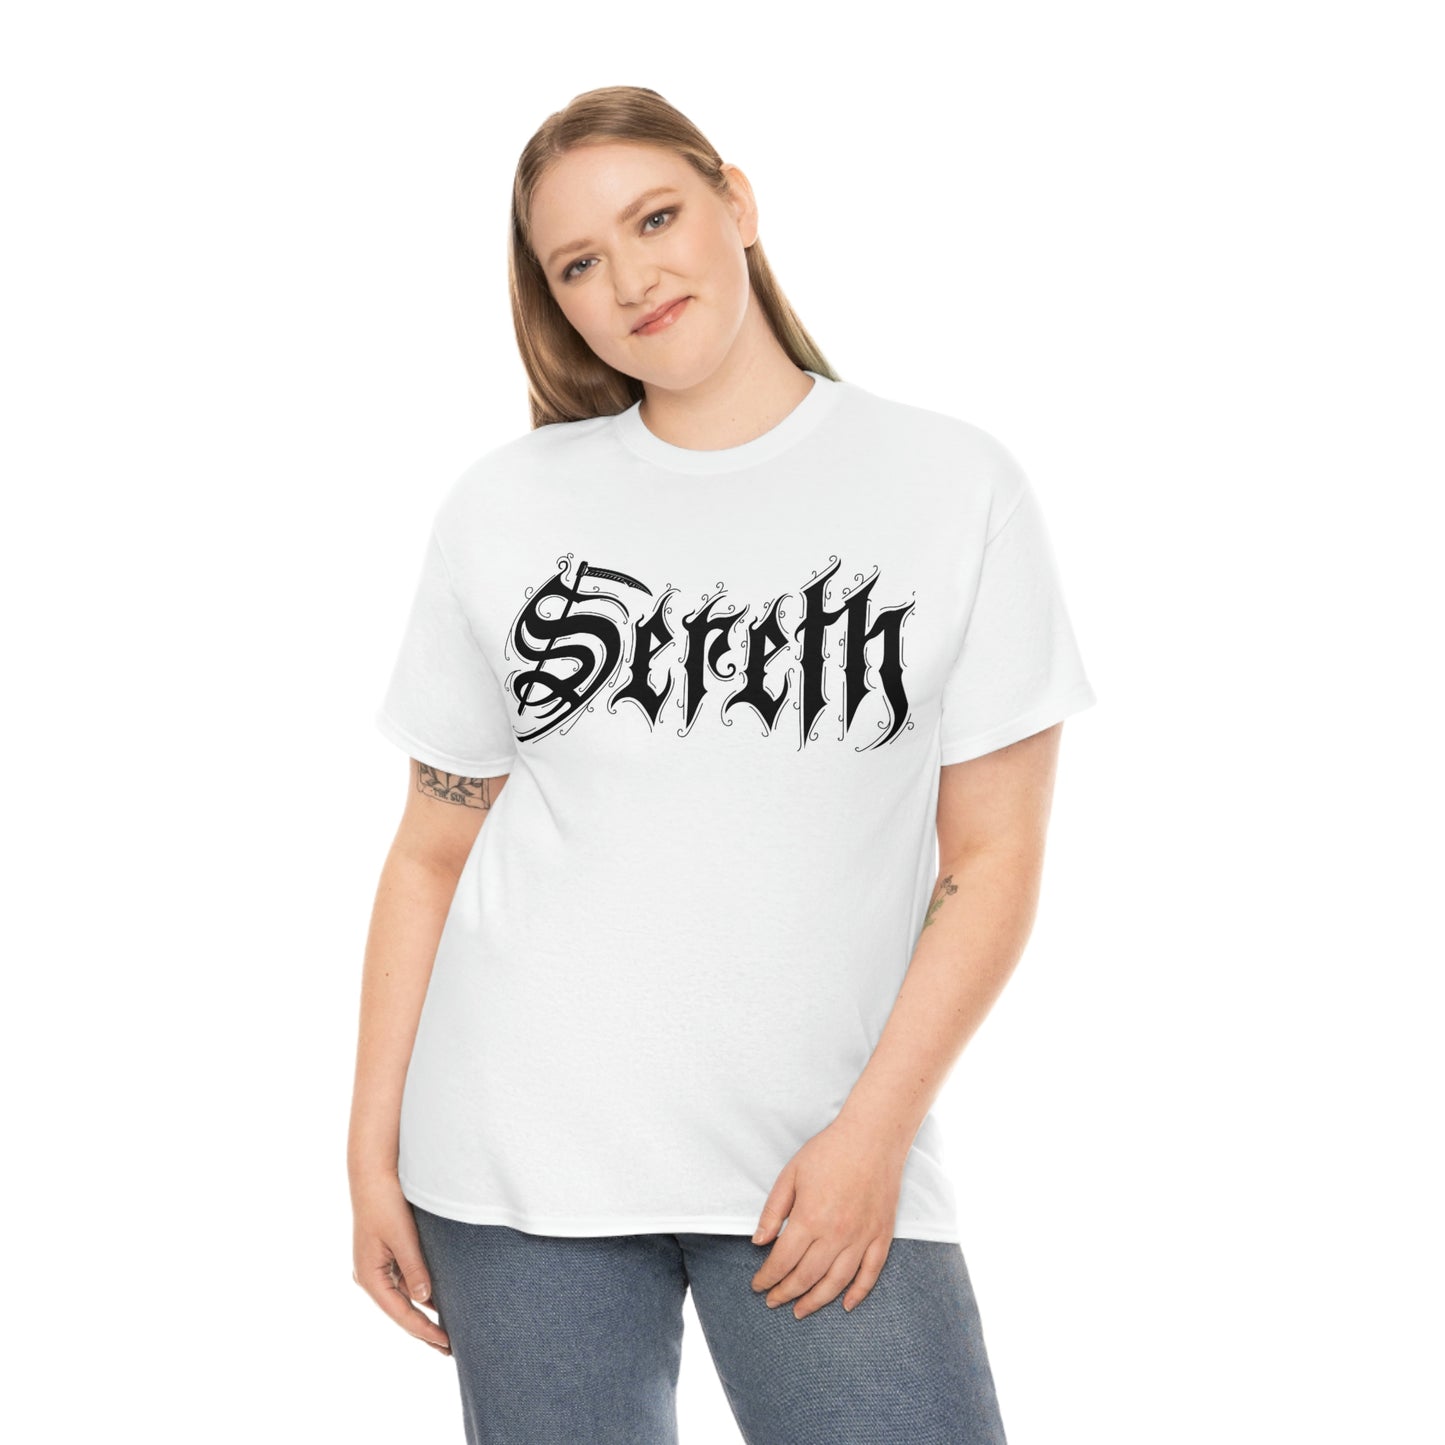 Sereth - Logo (UK)